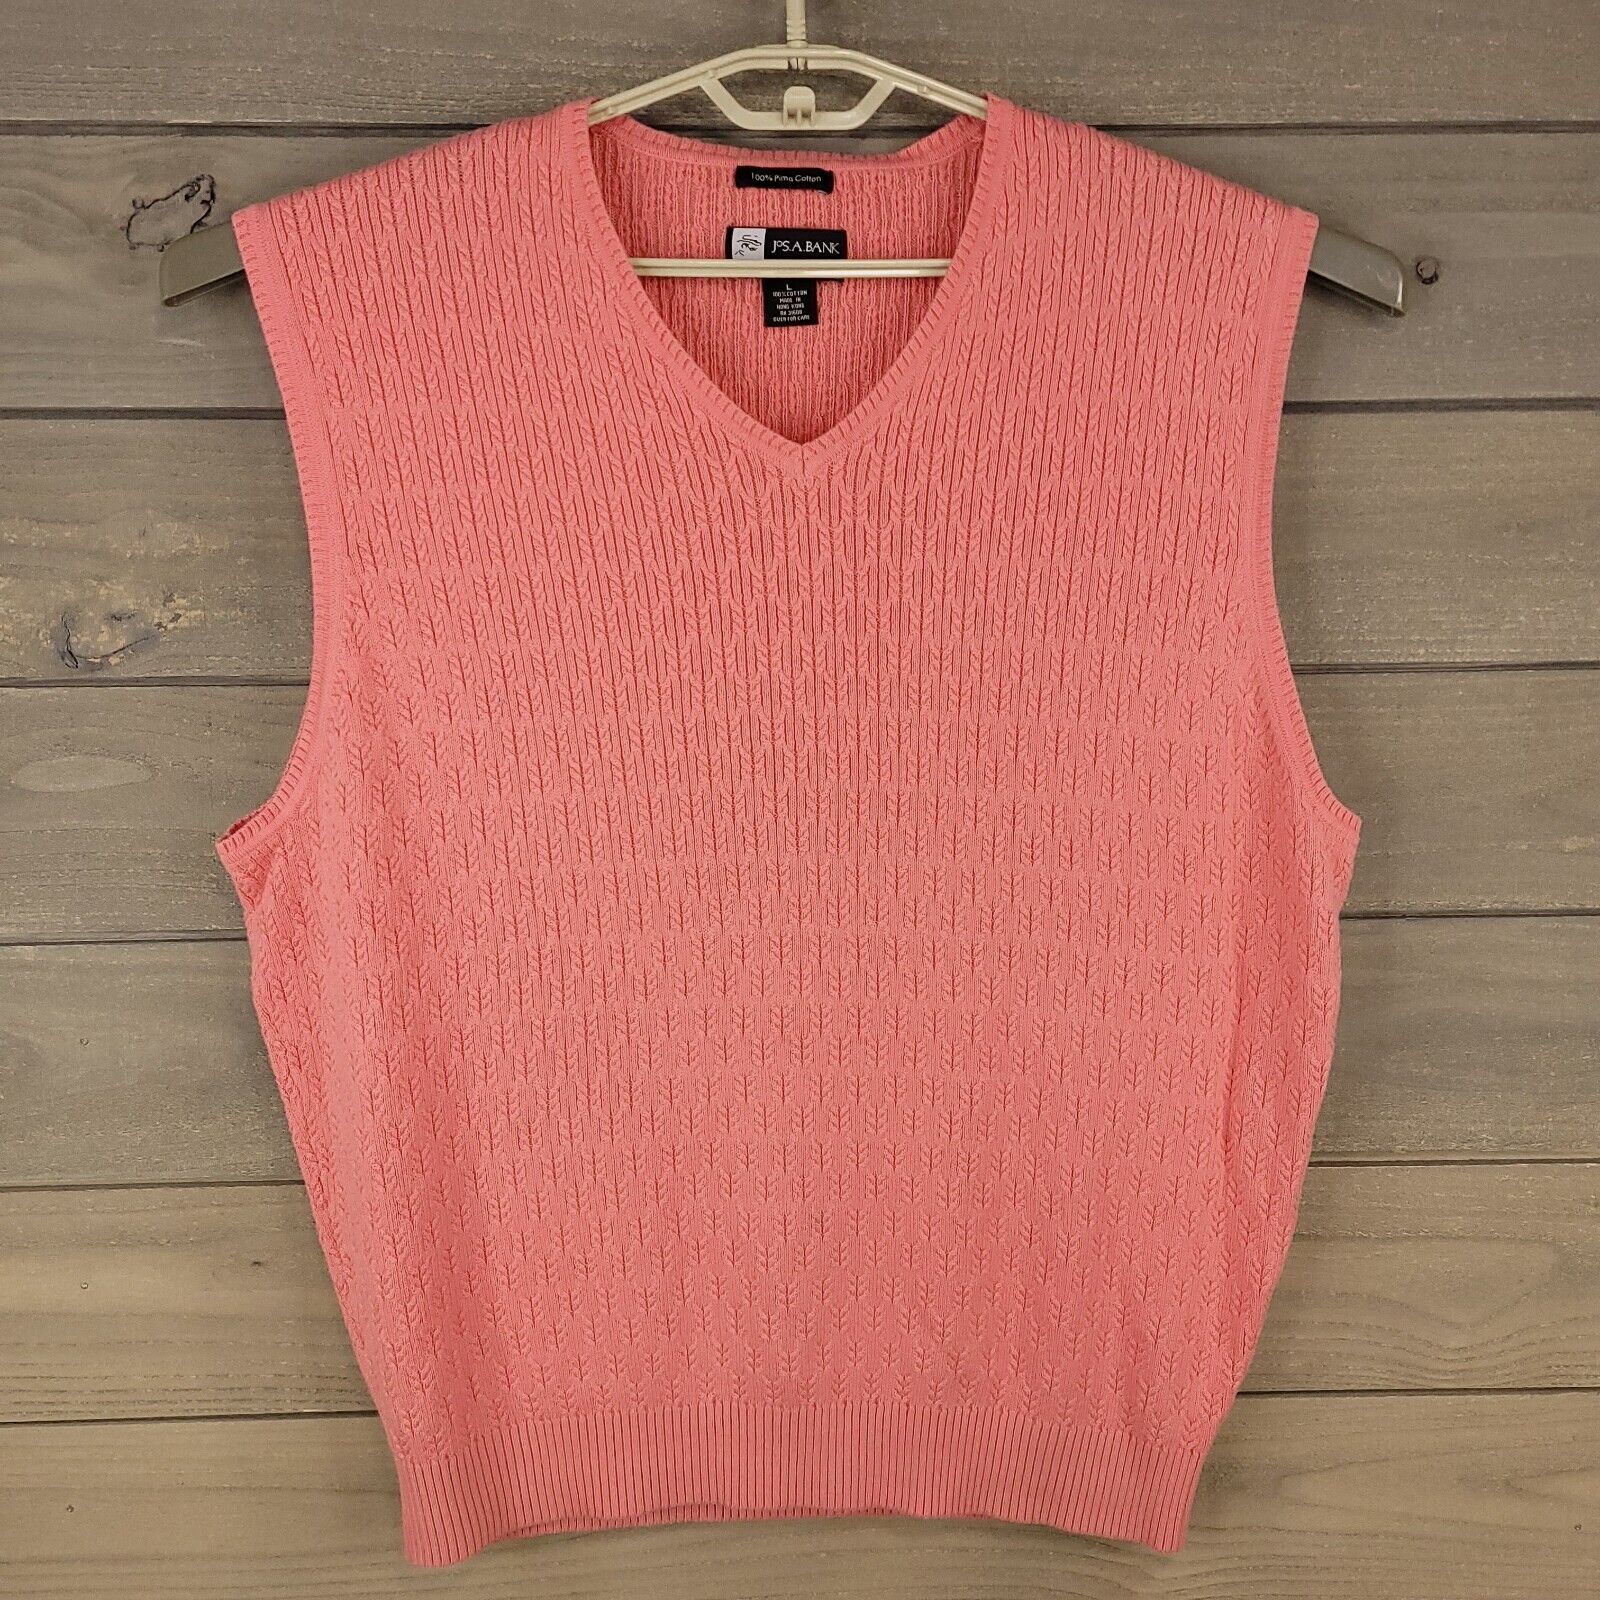 poll Markeer dennenboom Jos A Bank Sweater Vest Mens Large Pink Pima Cotton Cable Knit V Neck  Preppy | eBay